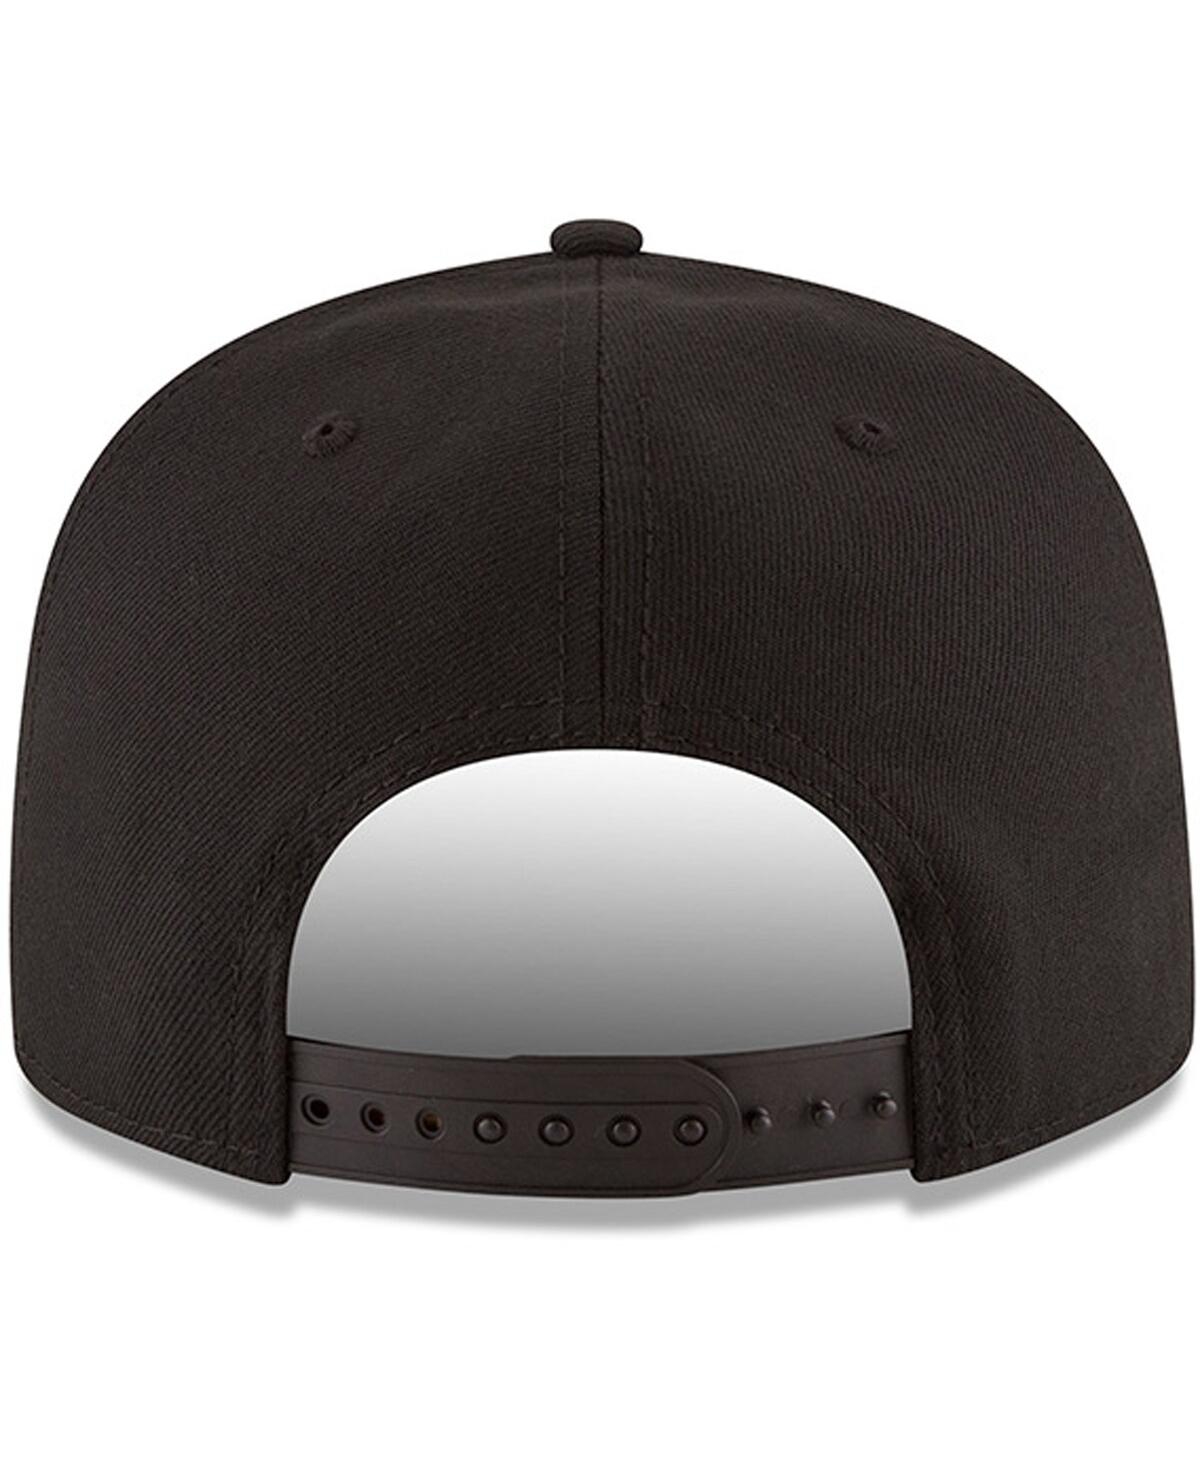 Shop Lids New Era Men's Black Sacramento Kings Black White Logo 9fifty Adjustable Snapback Hat